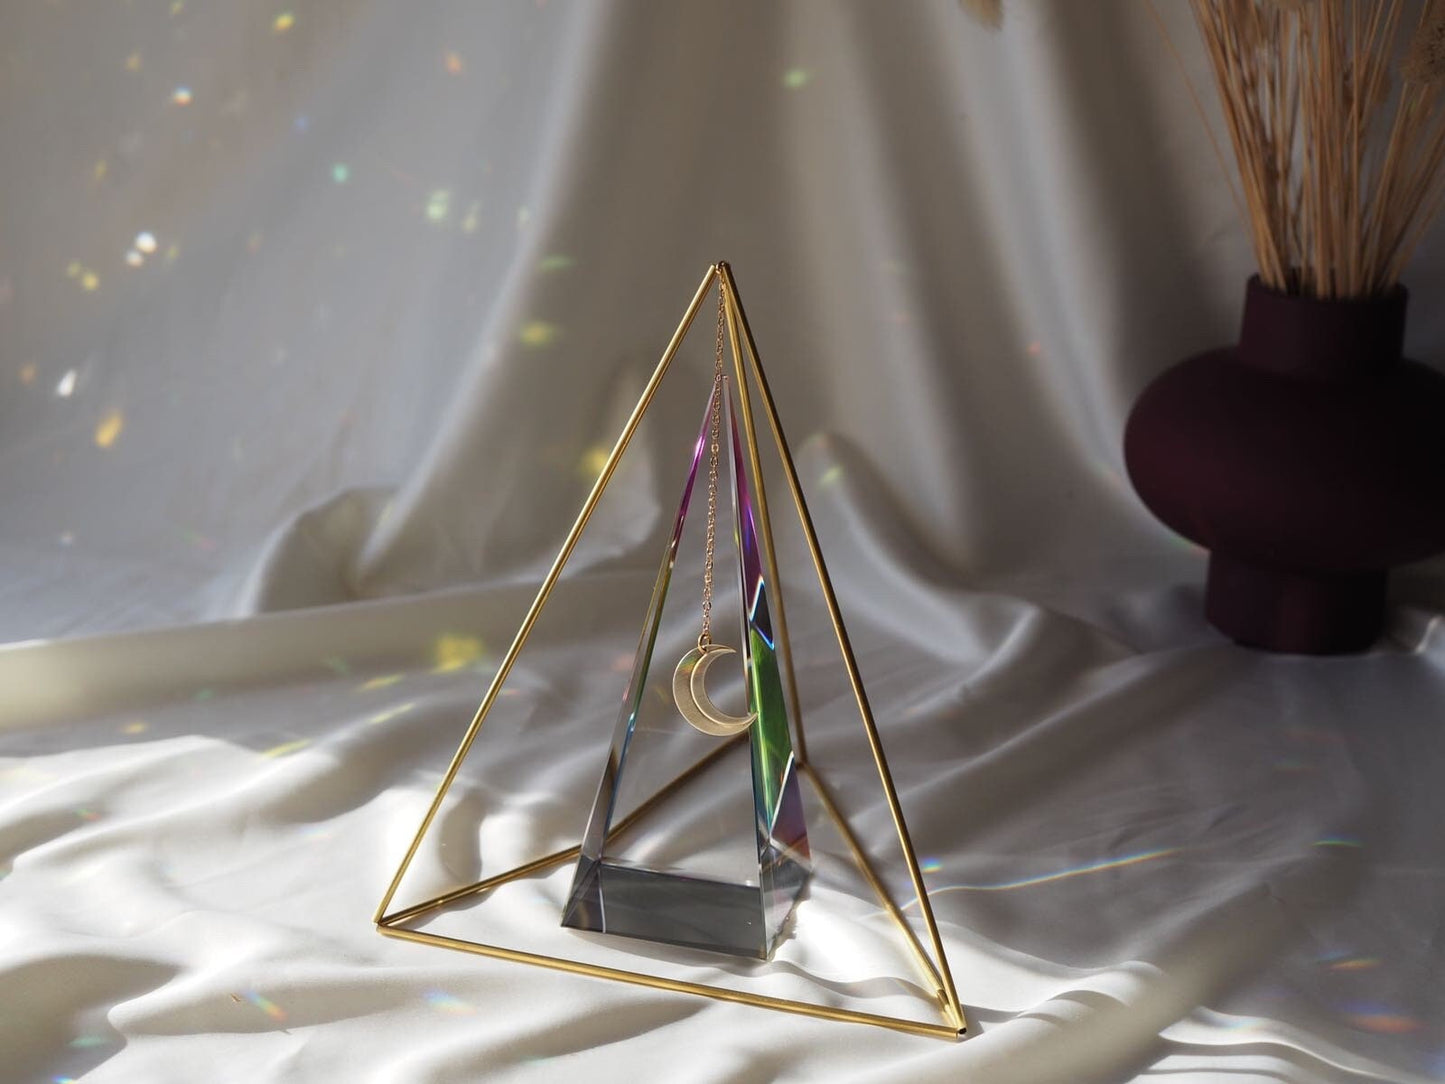 Big glass triangle rainbow prism, desk decor, geometric decor, suncatcher, office decor, light diffuser,home decoration, Christmas gift idea